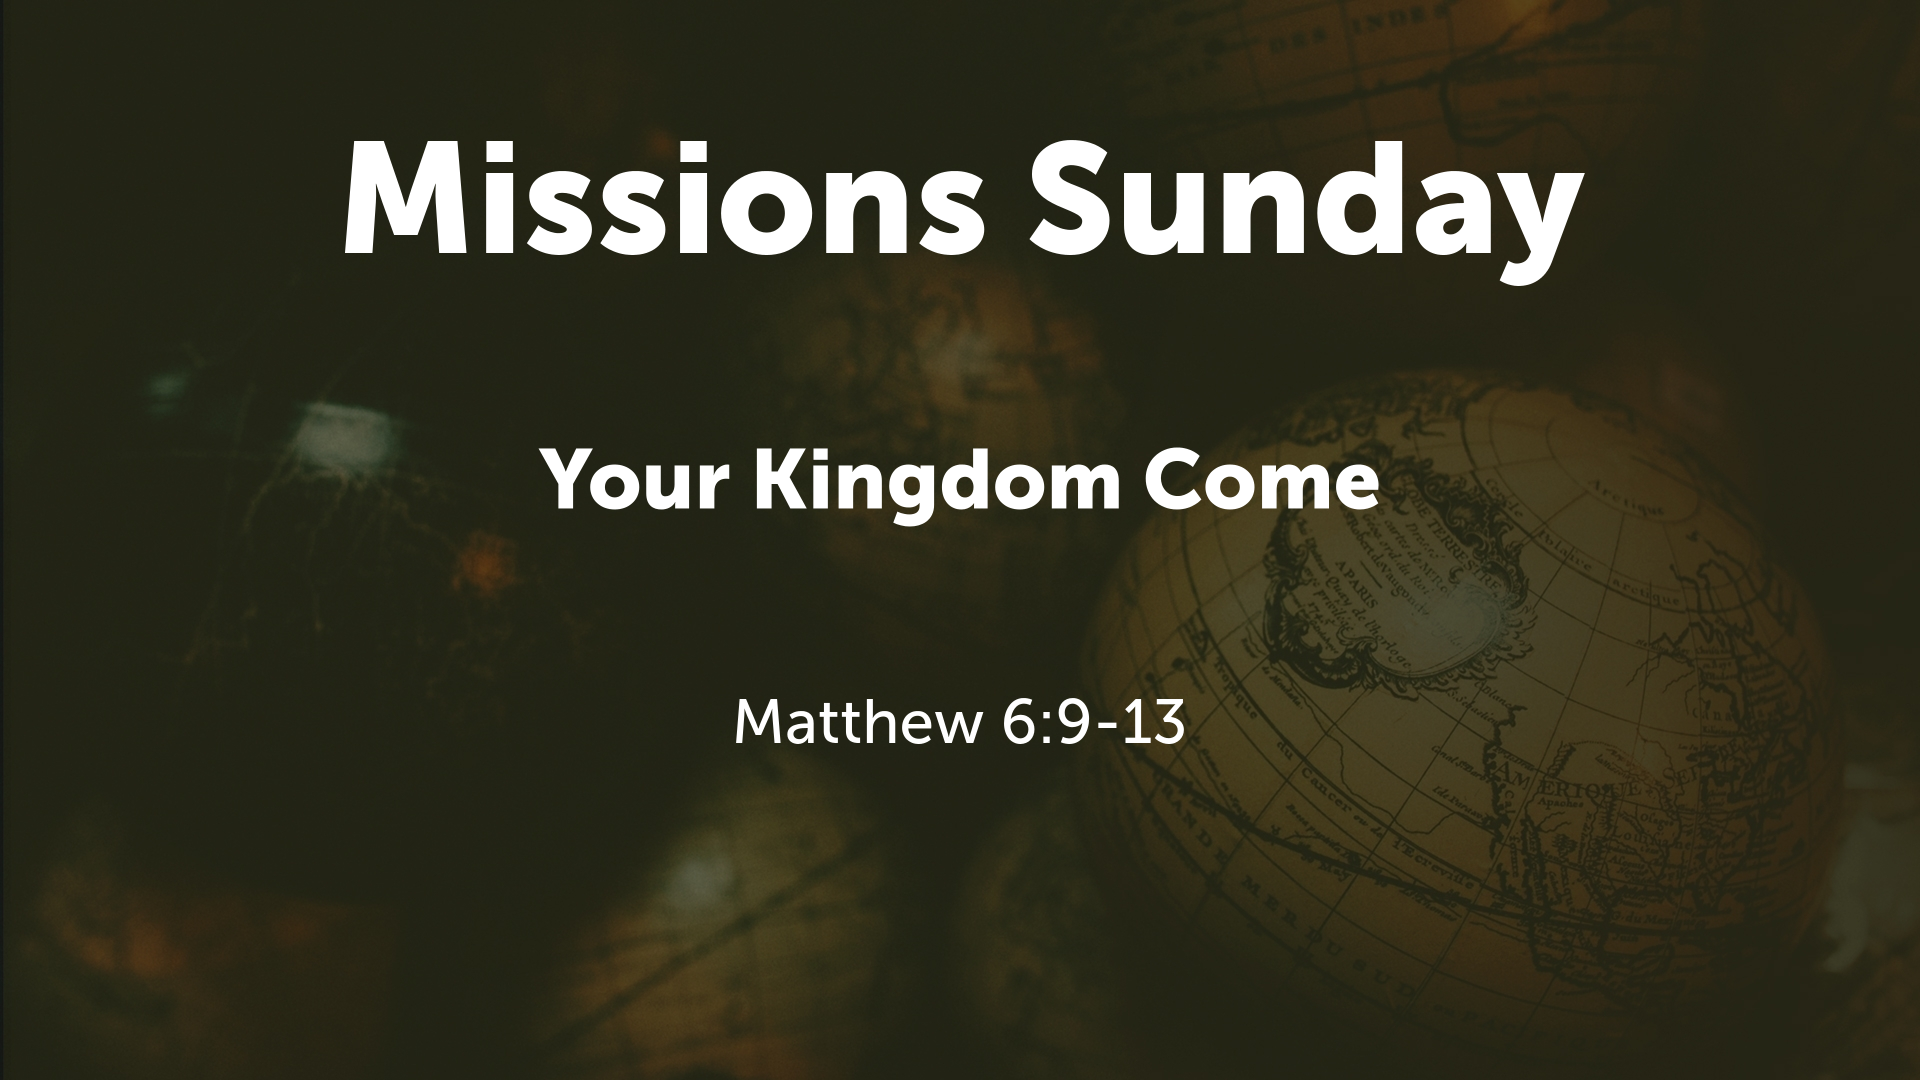 May 17, 2020 - Your Kingdom Come (Video) II Matthew 6:9-13